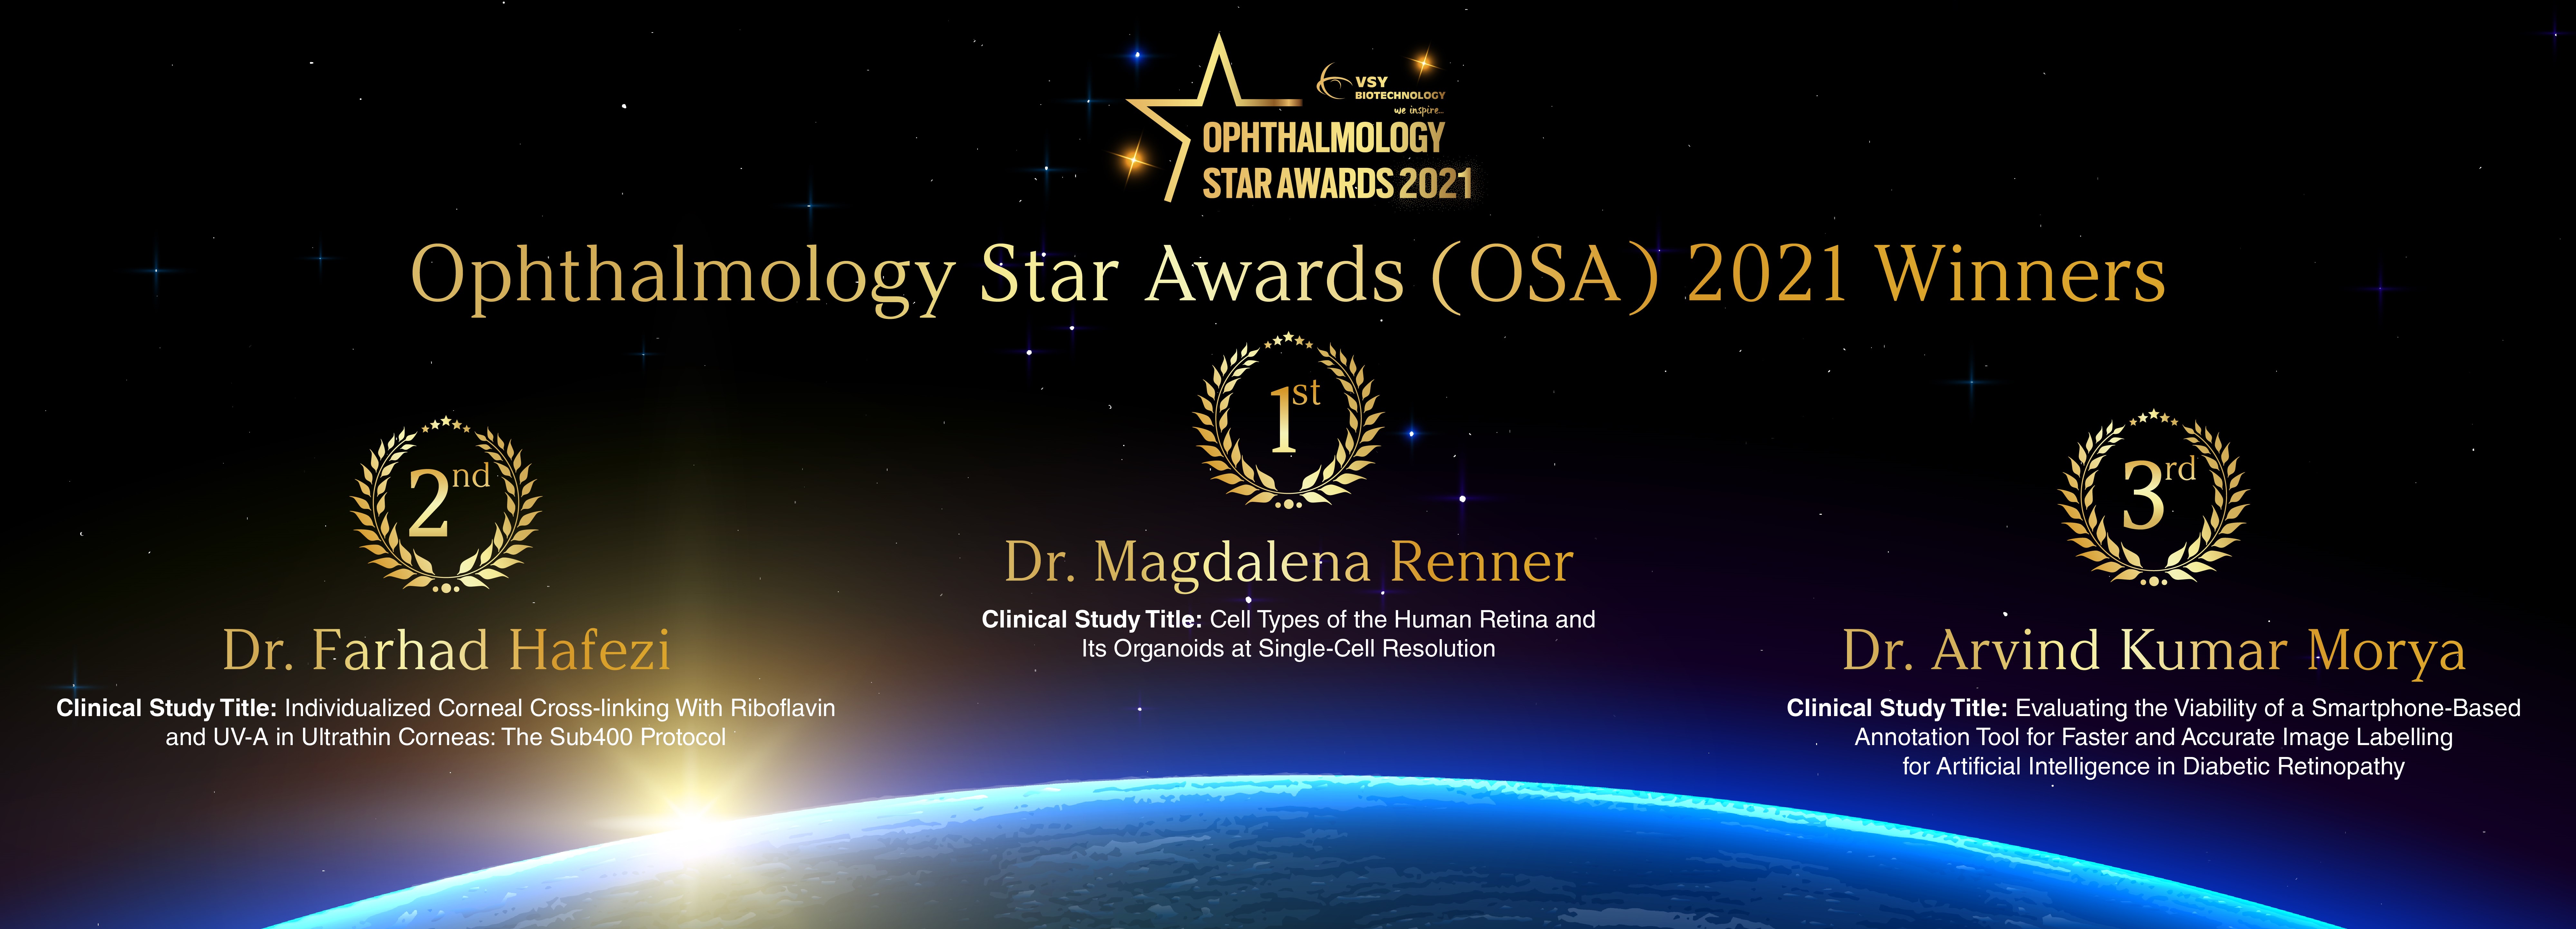 COPY_Ophthalmology Star Awards 2021 Winners (2)